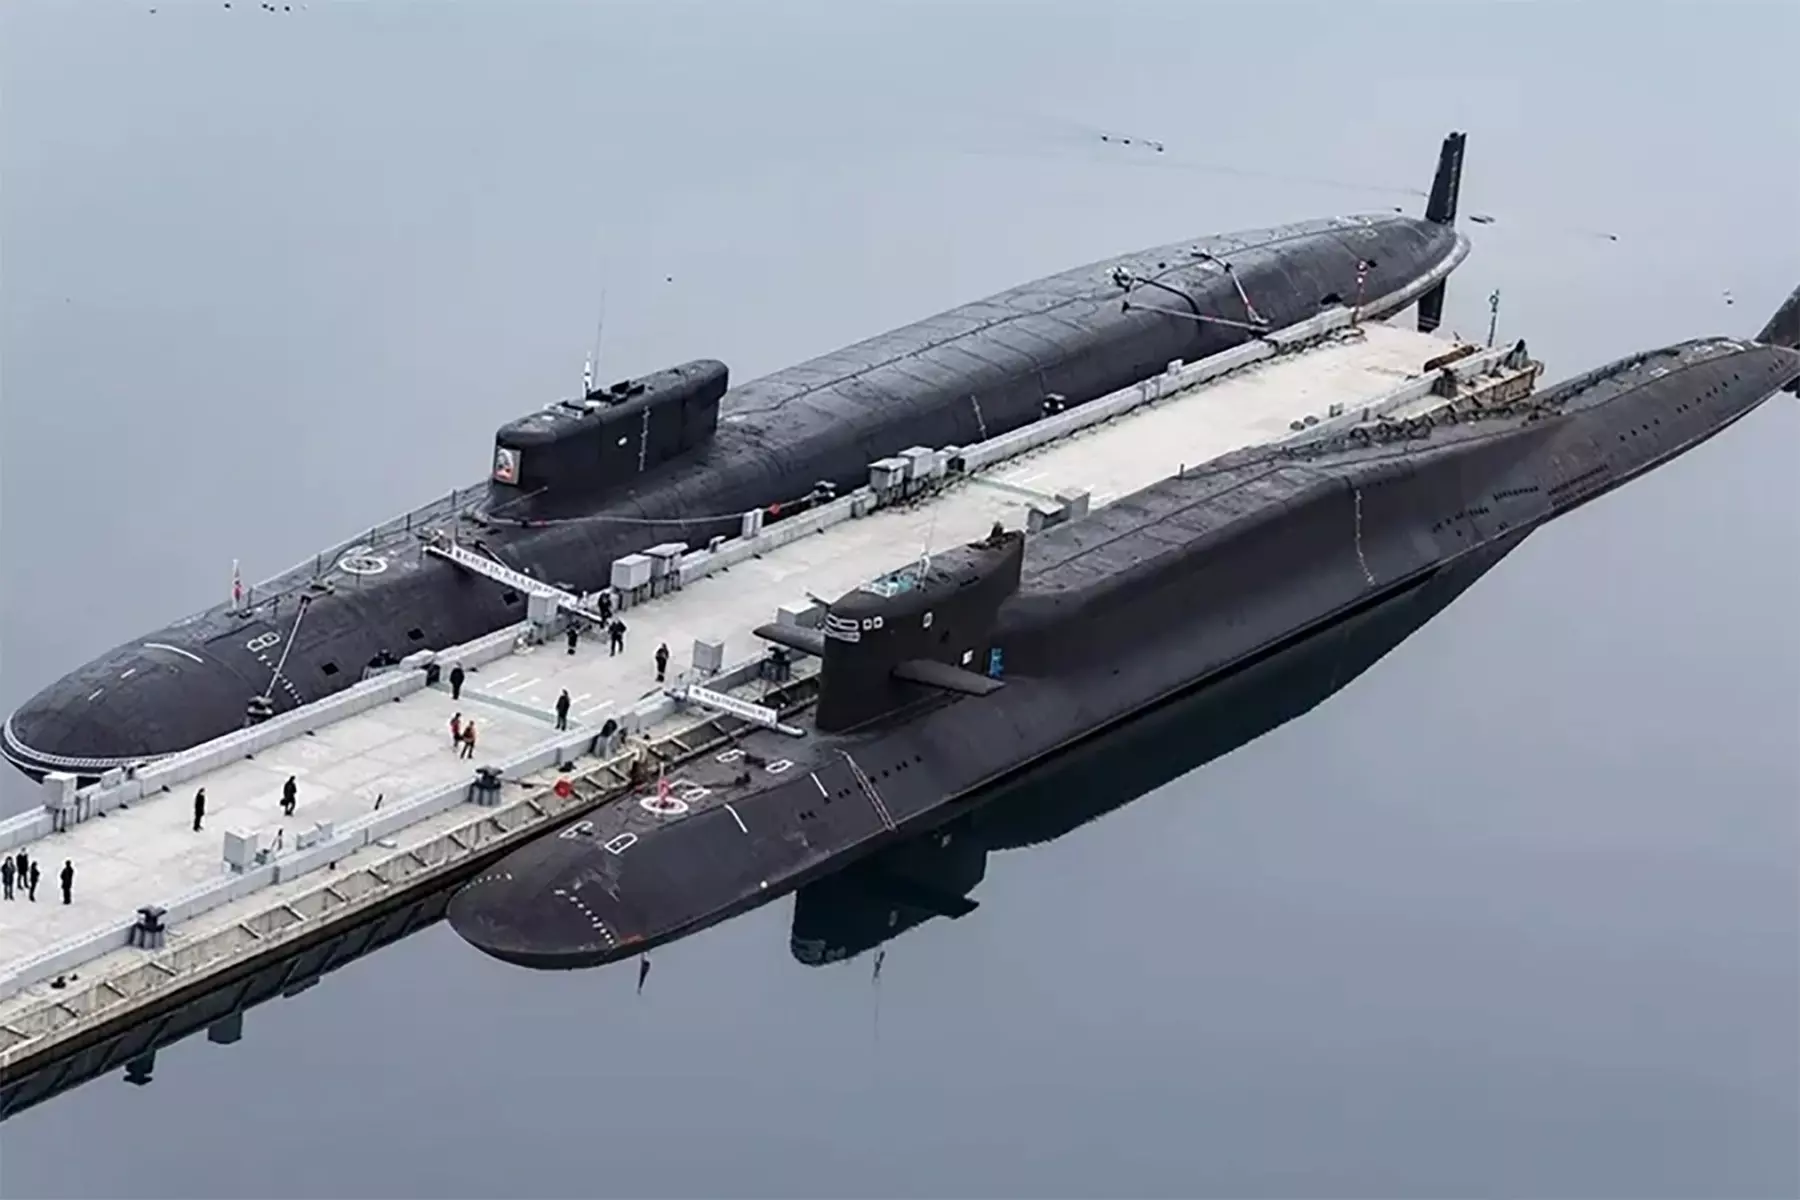 K-329 Belgorod nuclear submarine